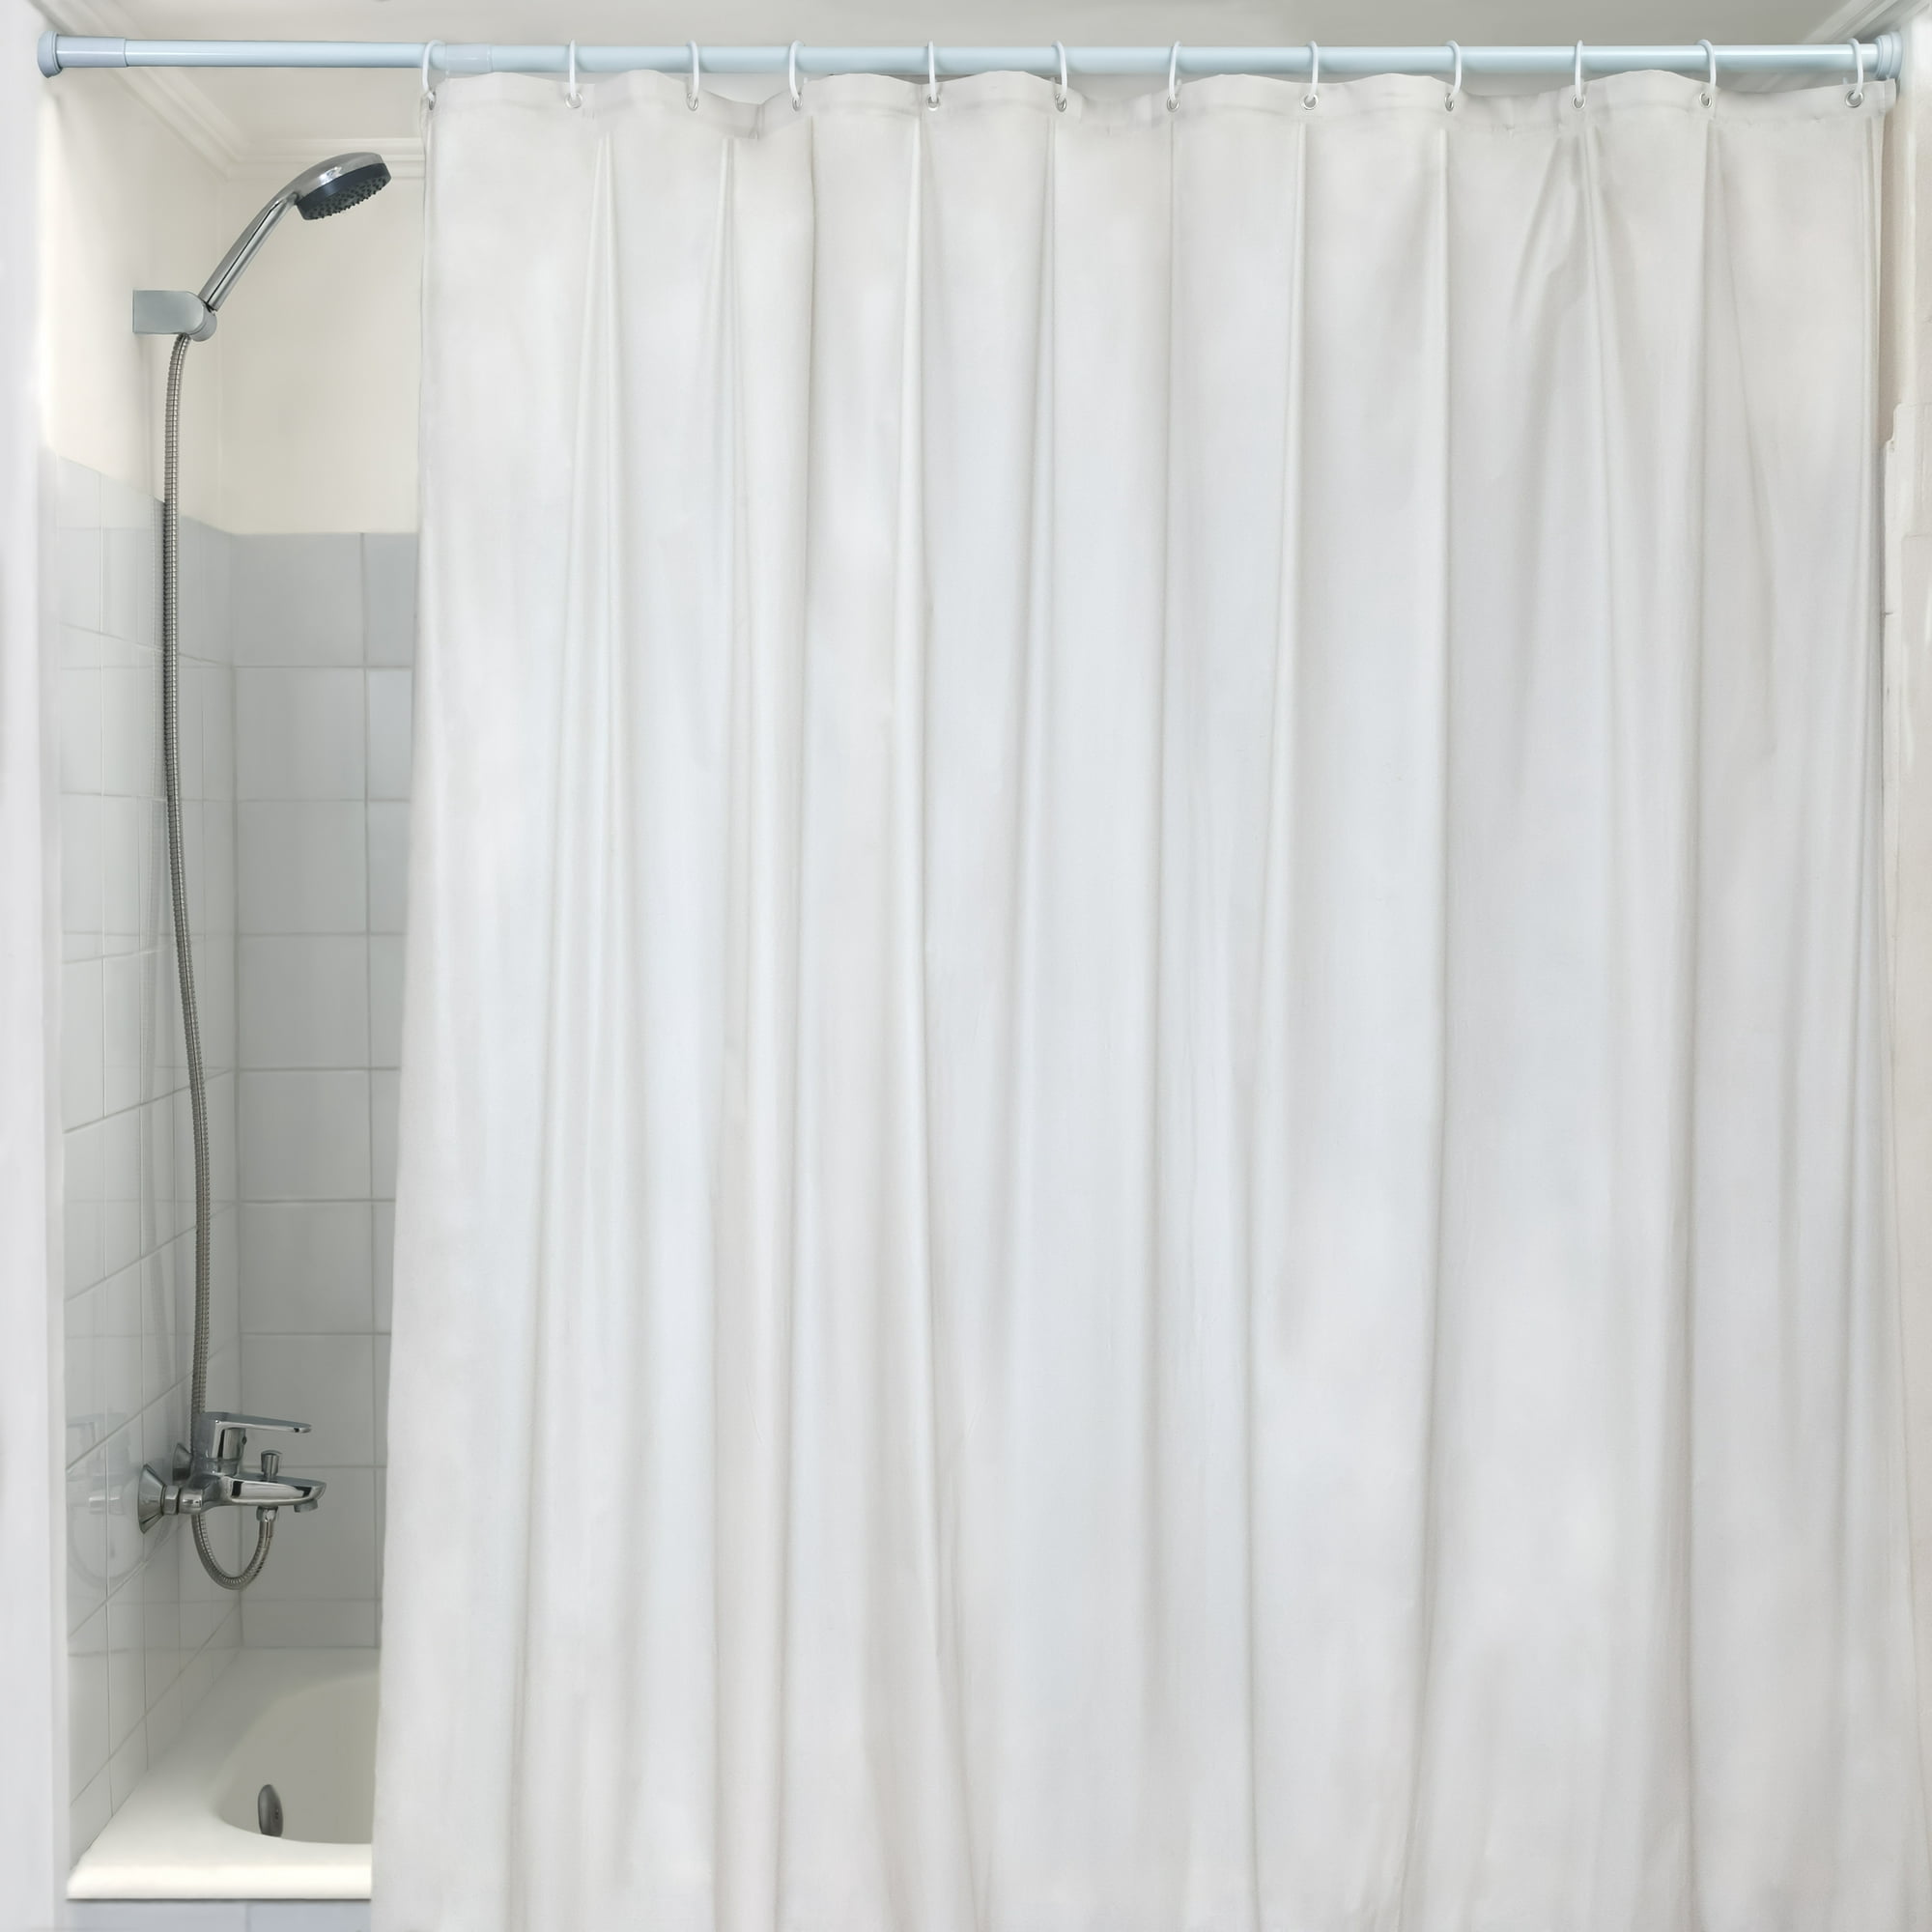 Forro cortina baño 180x180 cm Premium transparente Cotidiana